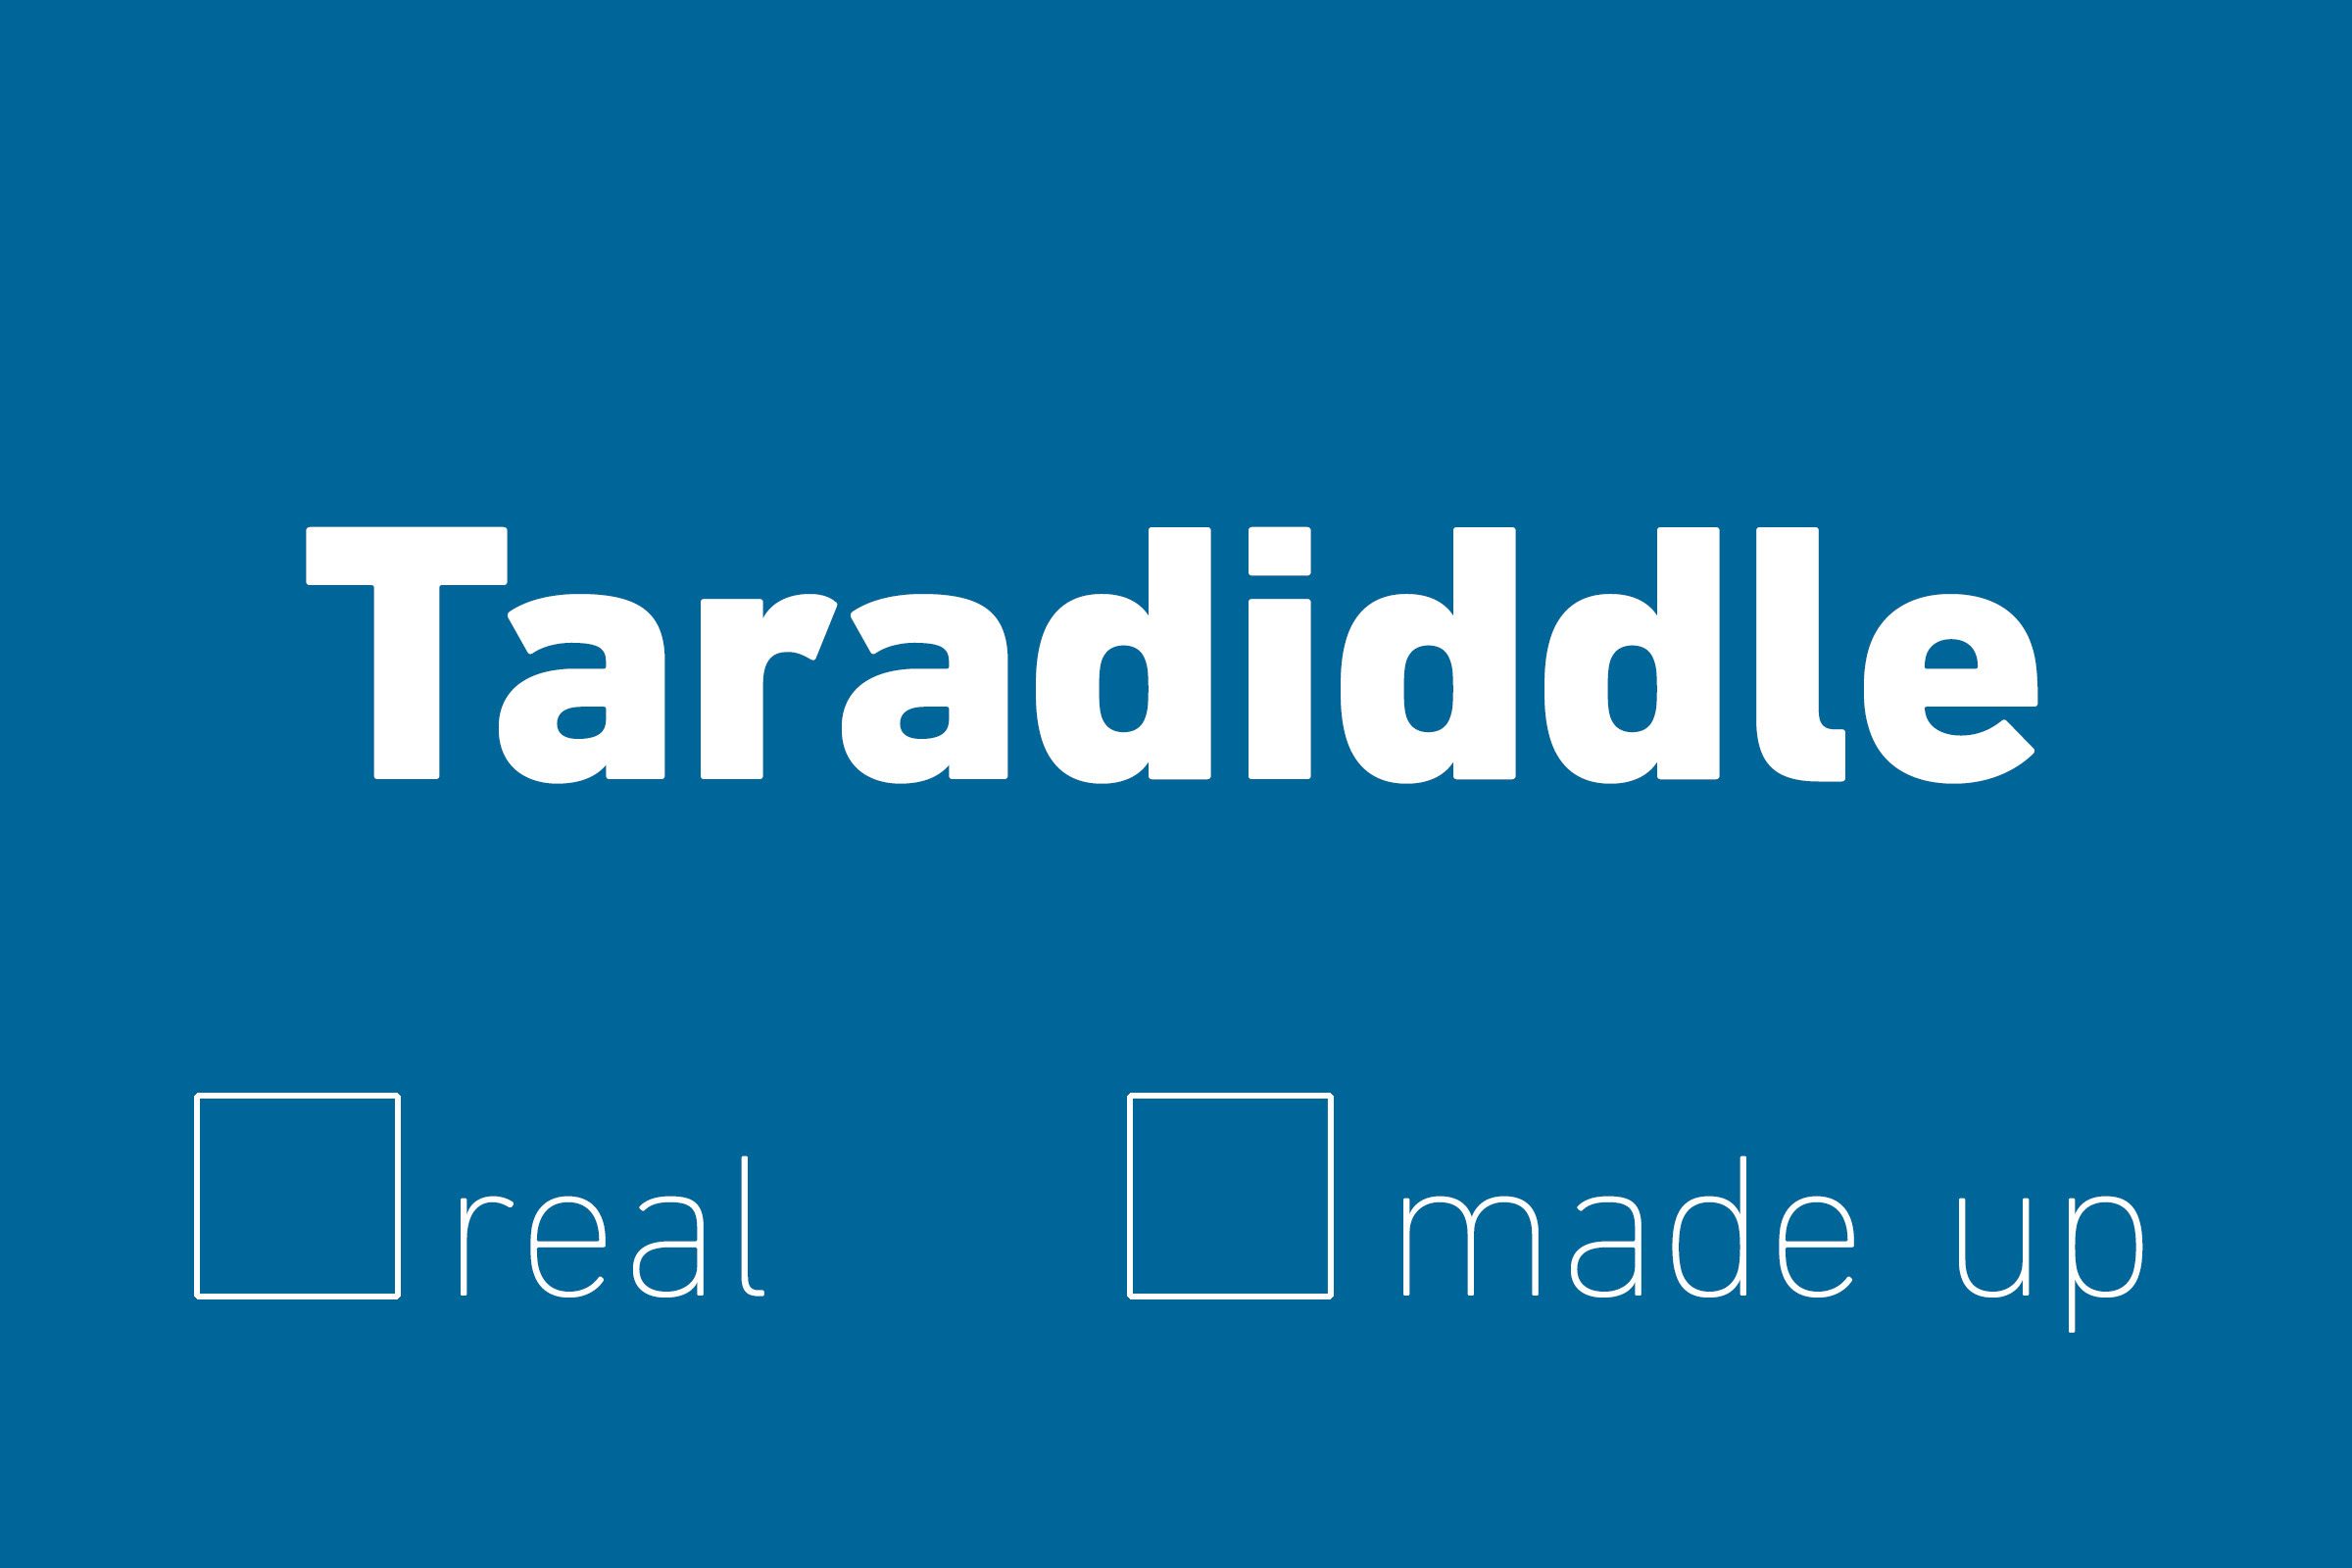 taradiddle